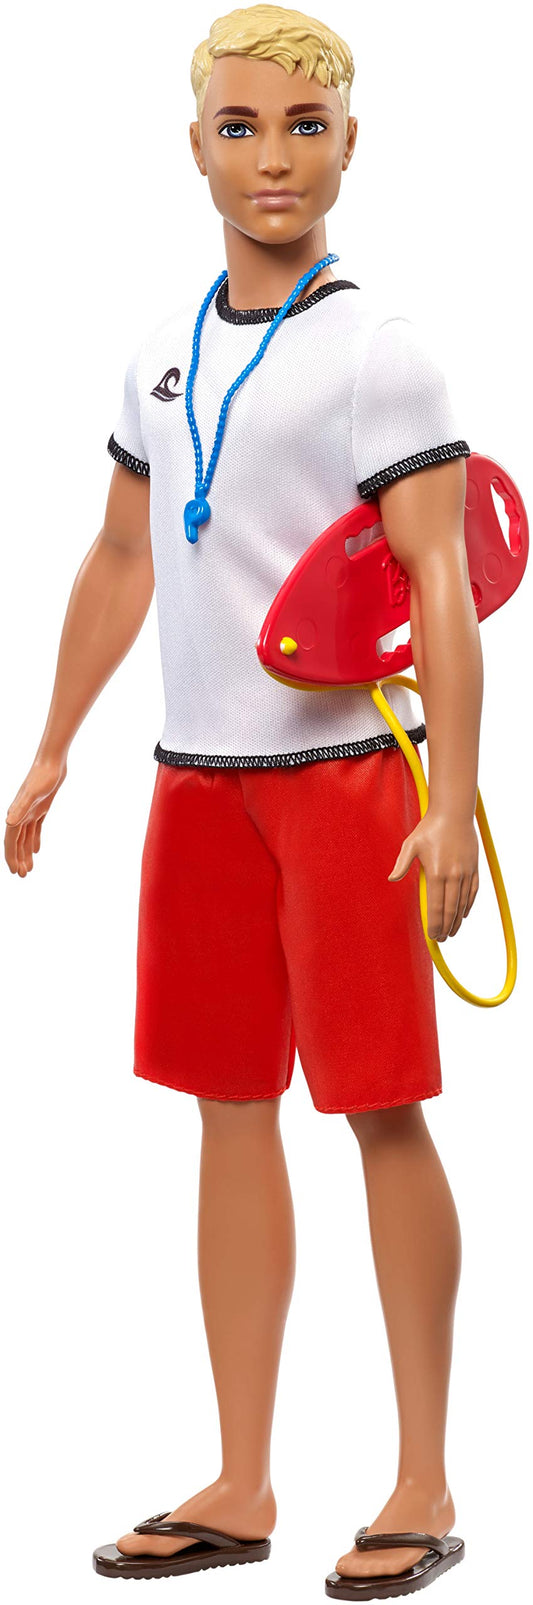 Barbie Lifeguard Doll